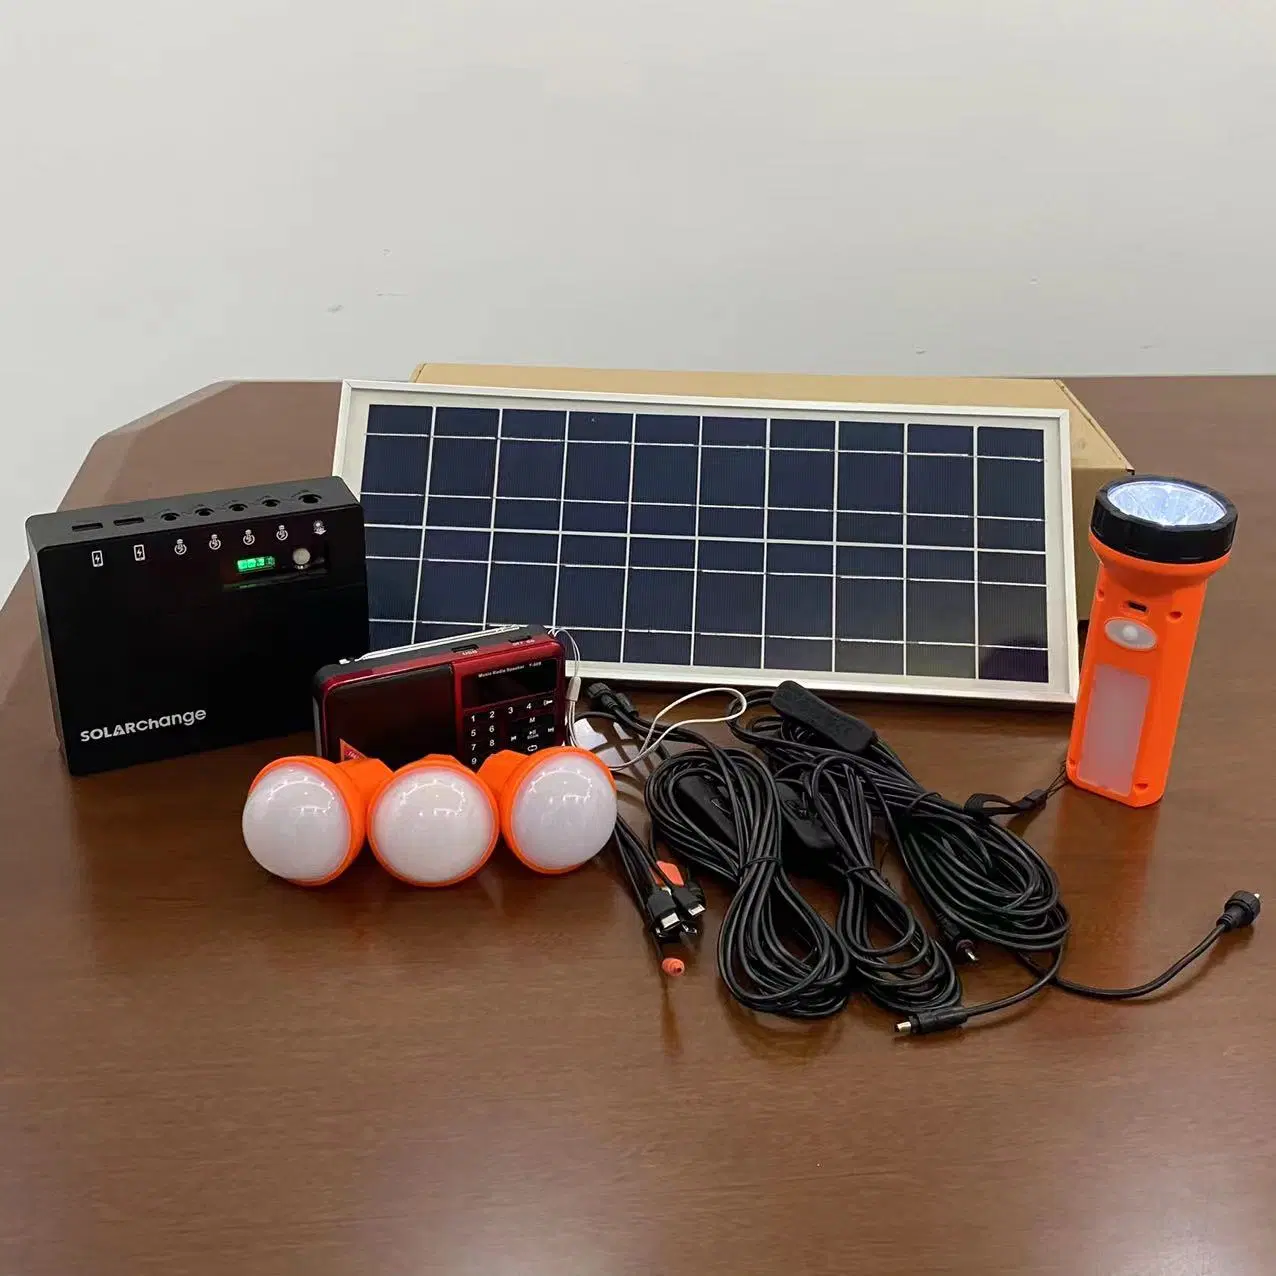 Verasol Certificate 10W/20W Lighting Solar Home System Kit with FM Радио/лампы/мобильные зарядные устройства (SC-810)